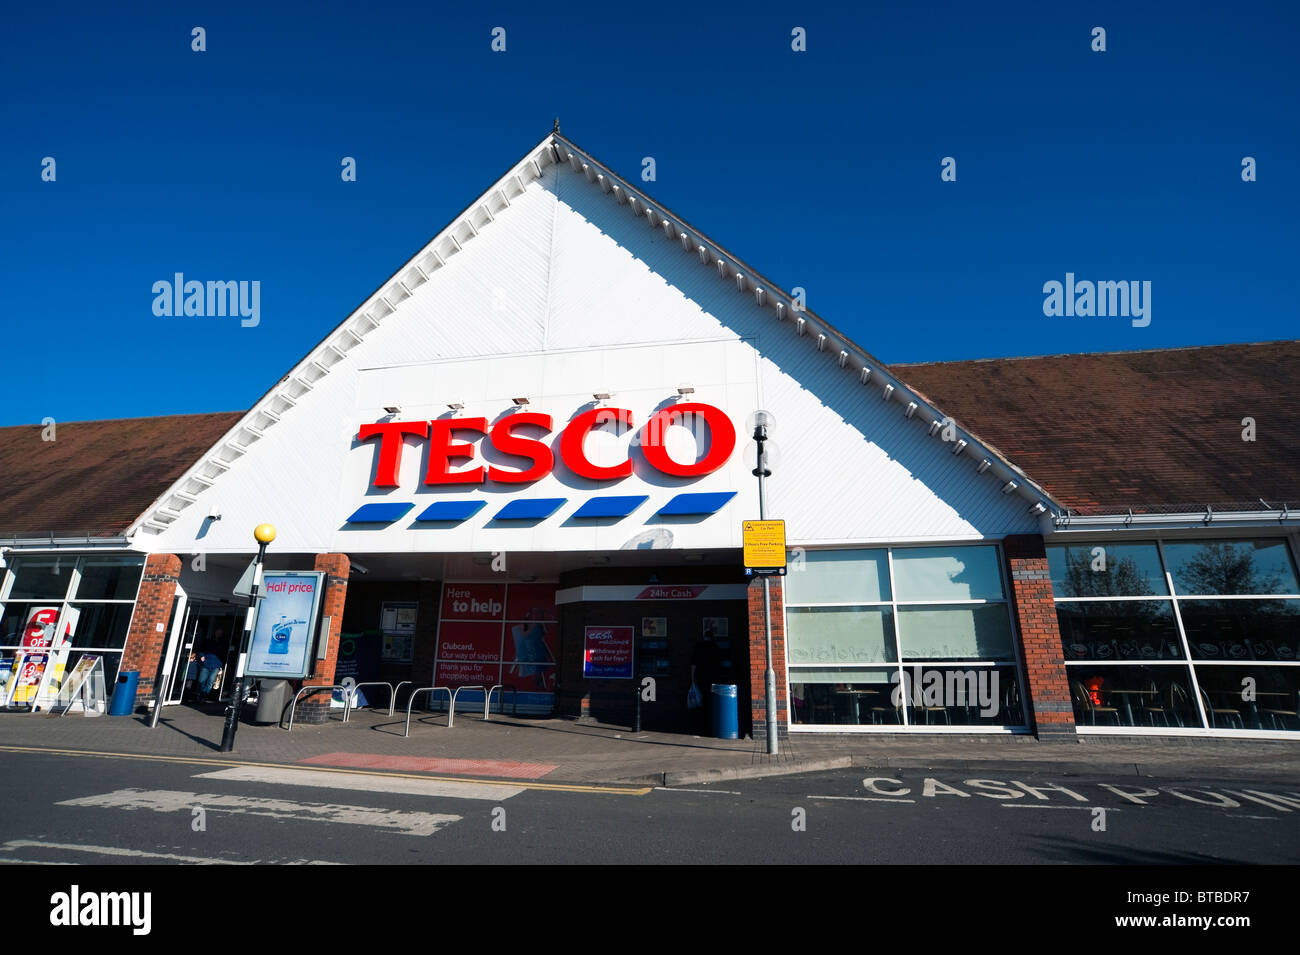 Tesco supermarket store, UK. Stock Photo